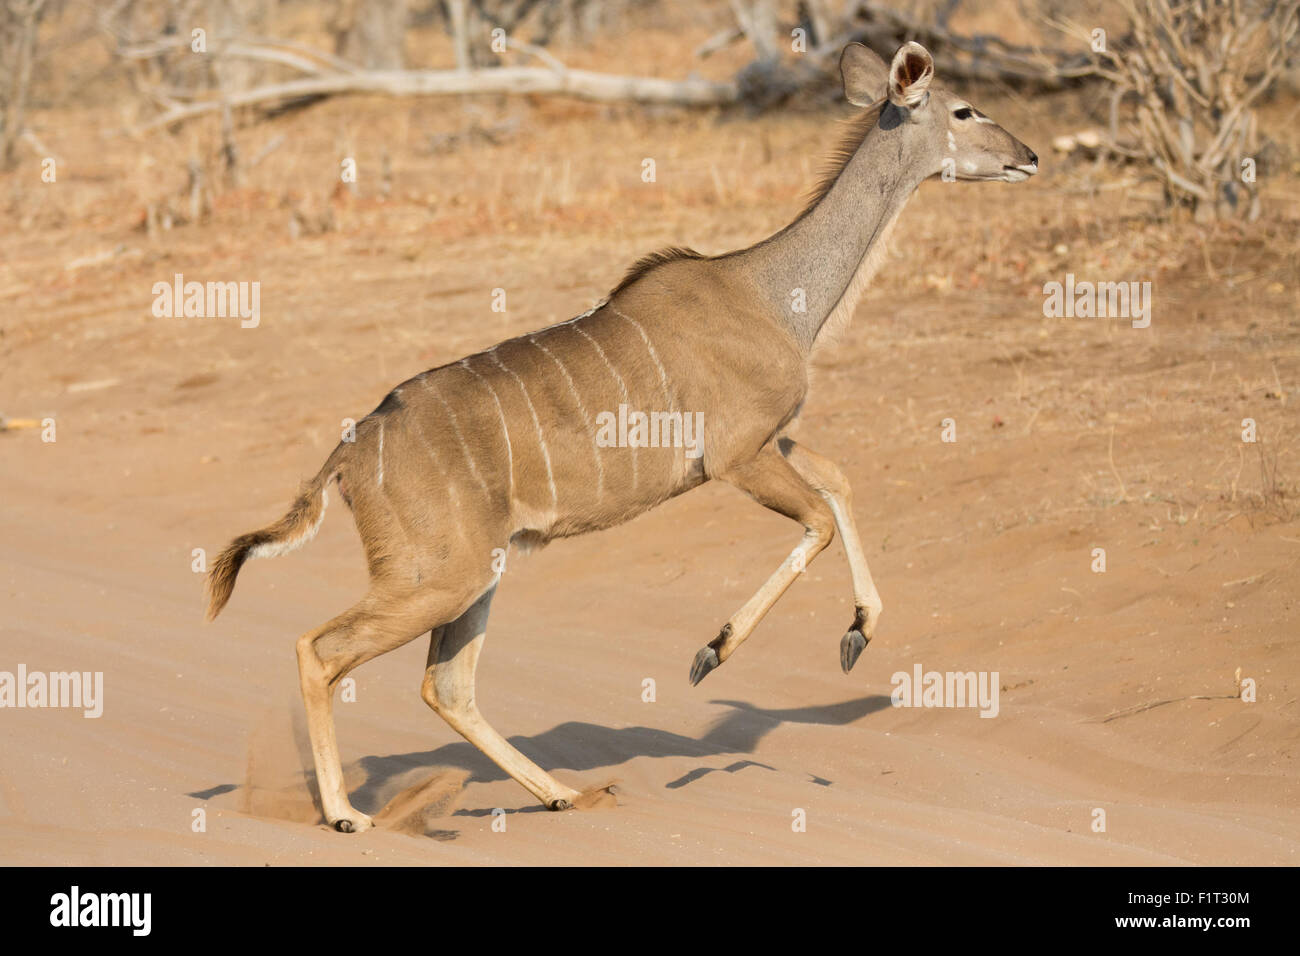 Kudu antelope Stock Photo